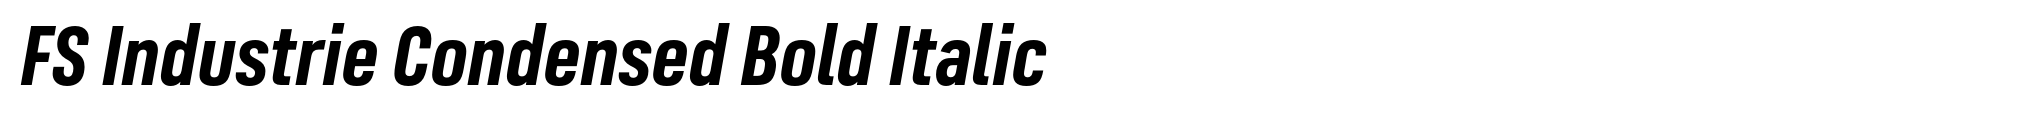 FS Industrie Condensed Bold Italic image